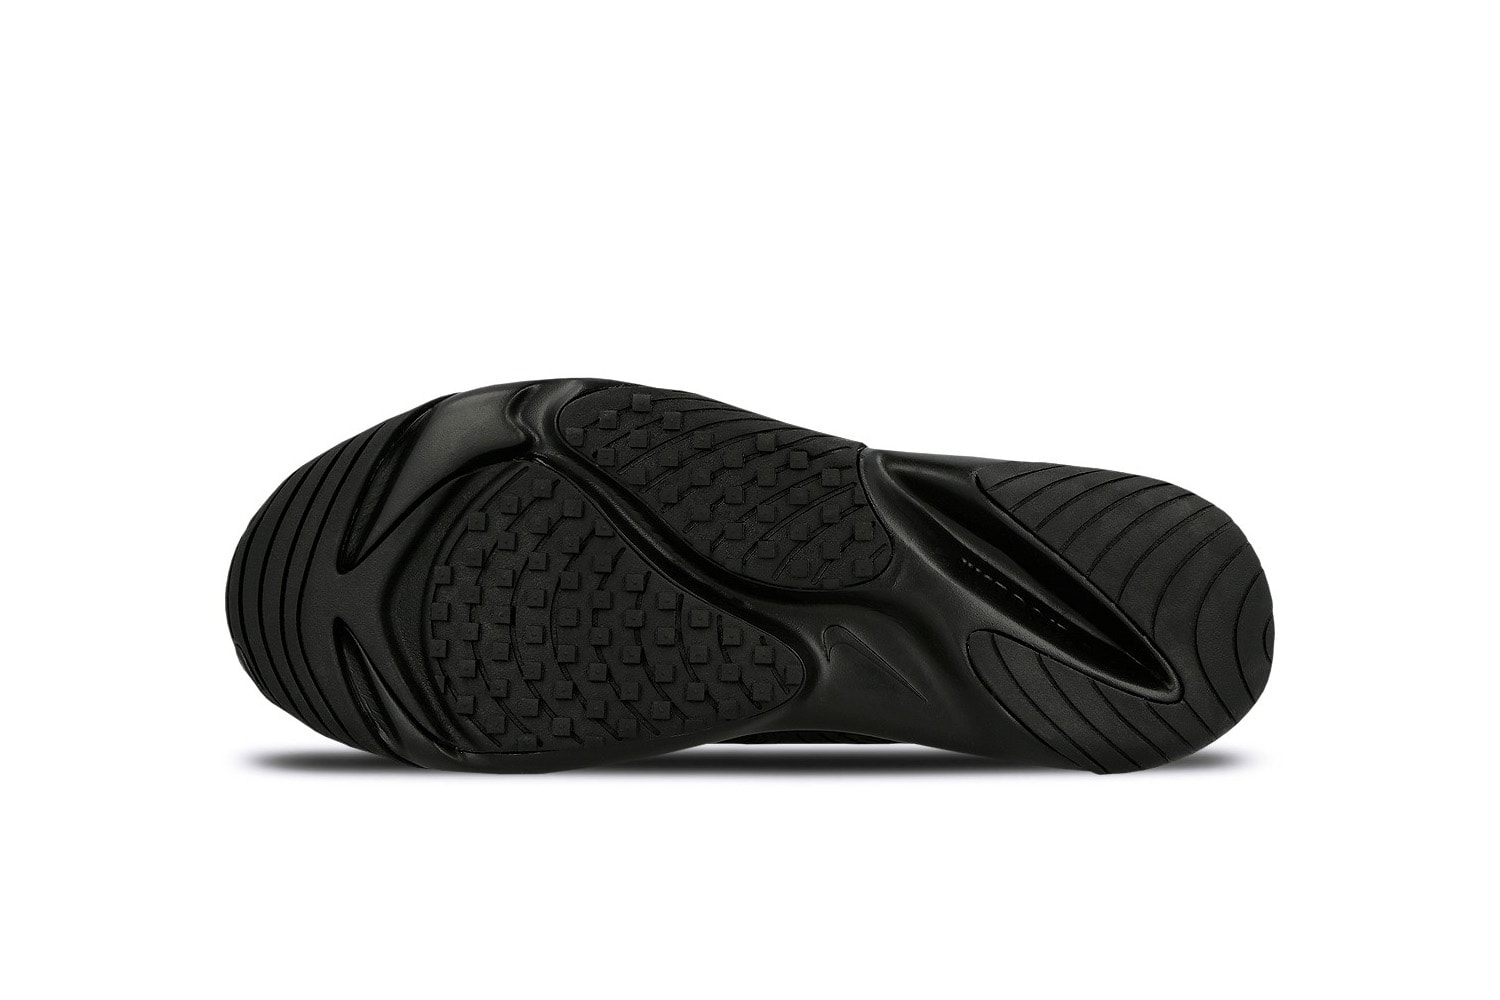 Nike Zoom 2K in "All Black" Release Date Where to Buy Sneaker Shoe Retro Futuristic Modern Silhouette